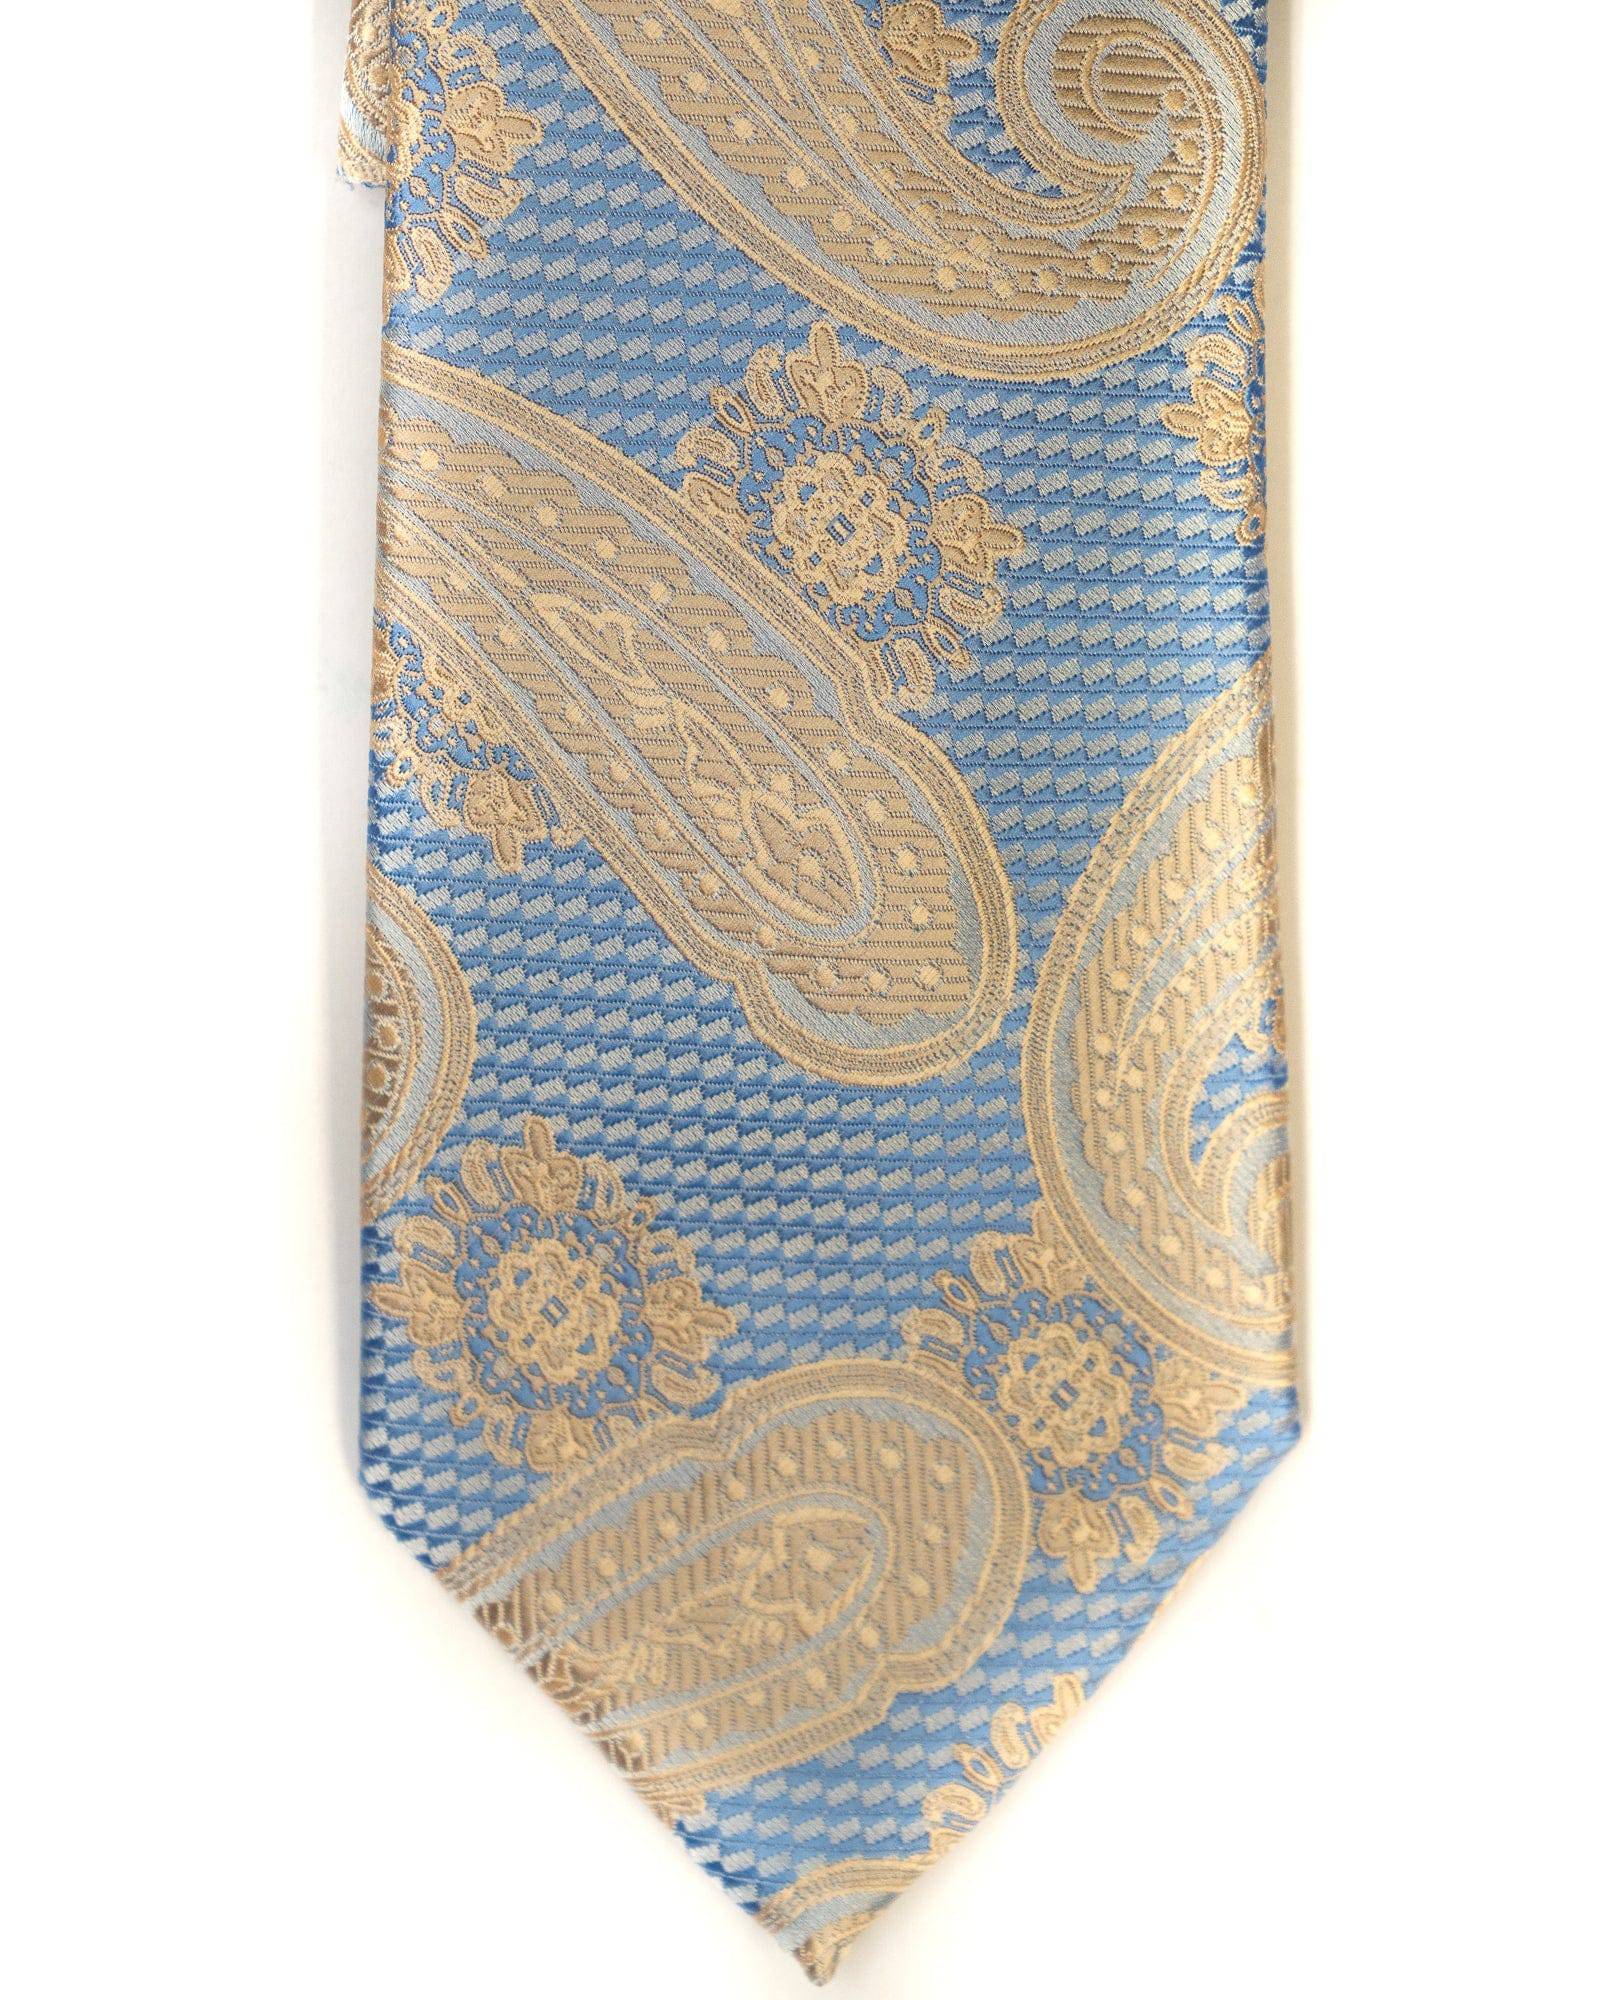 Venturi Uomo Paisley Tie in Blue with Tan - Rainwater's Men's Clothing and Tuxedo Rental